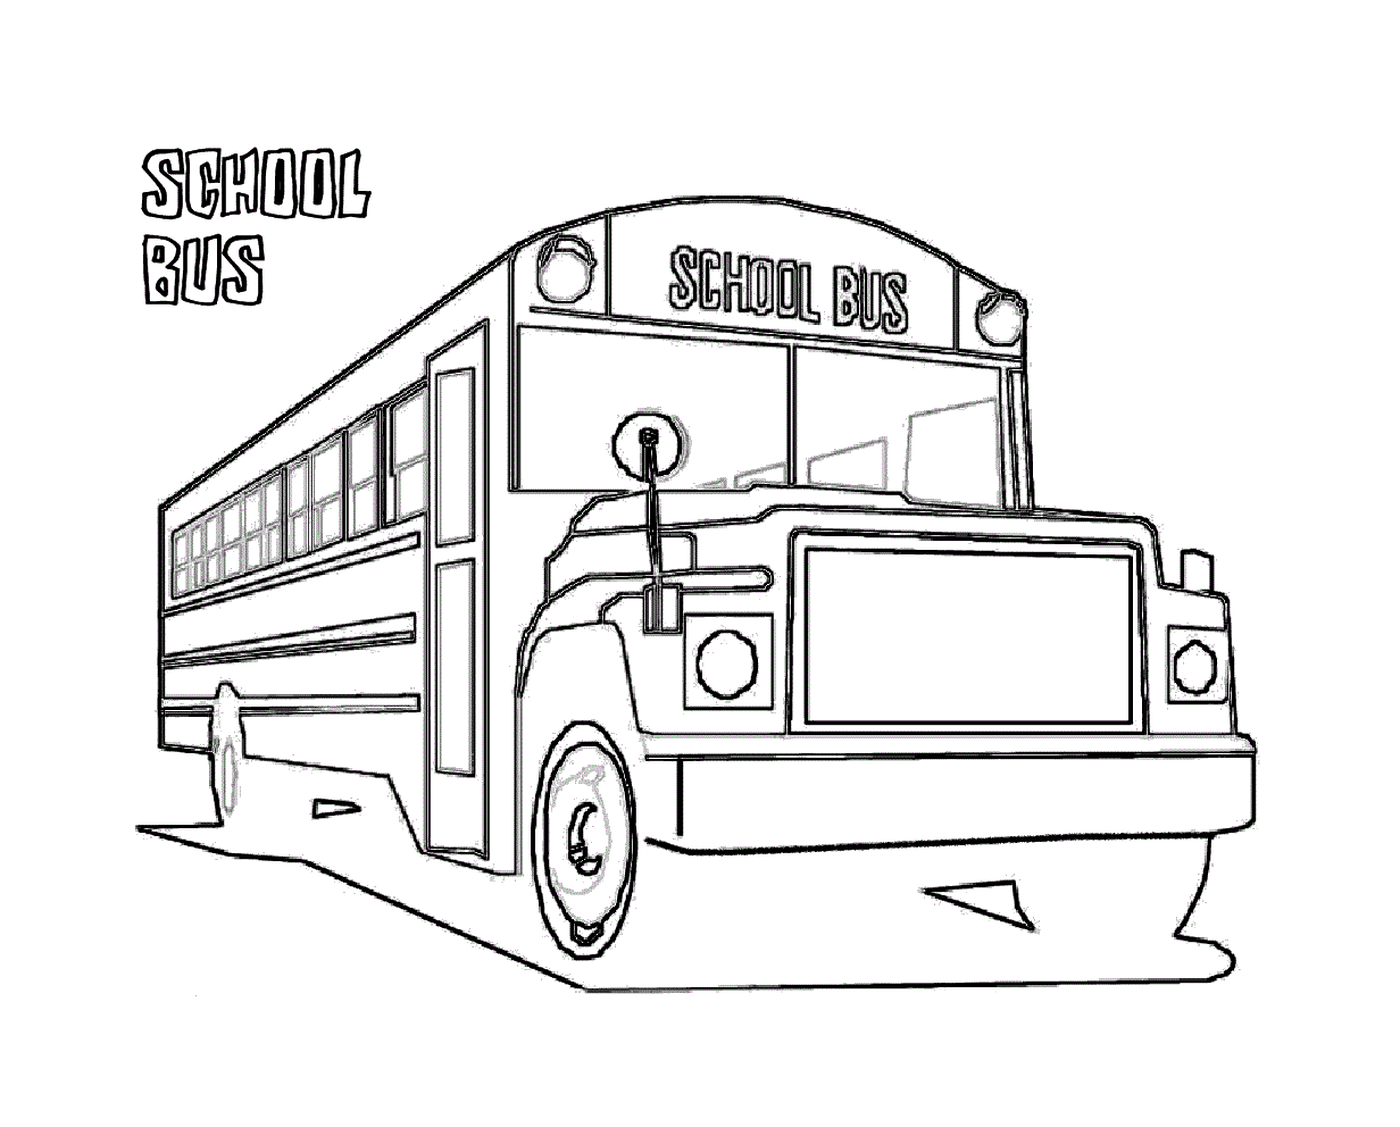  A school bus is heading for school 